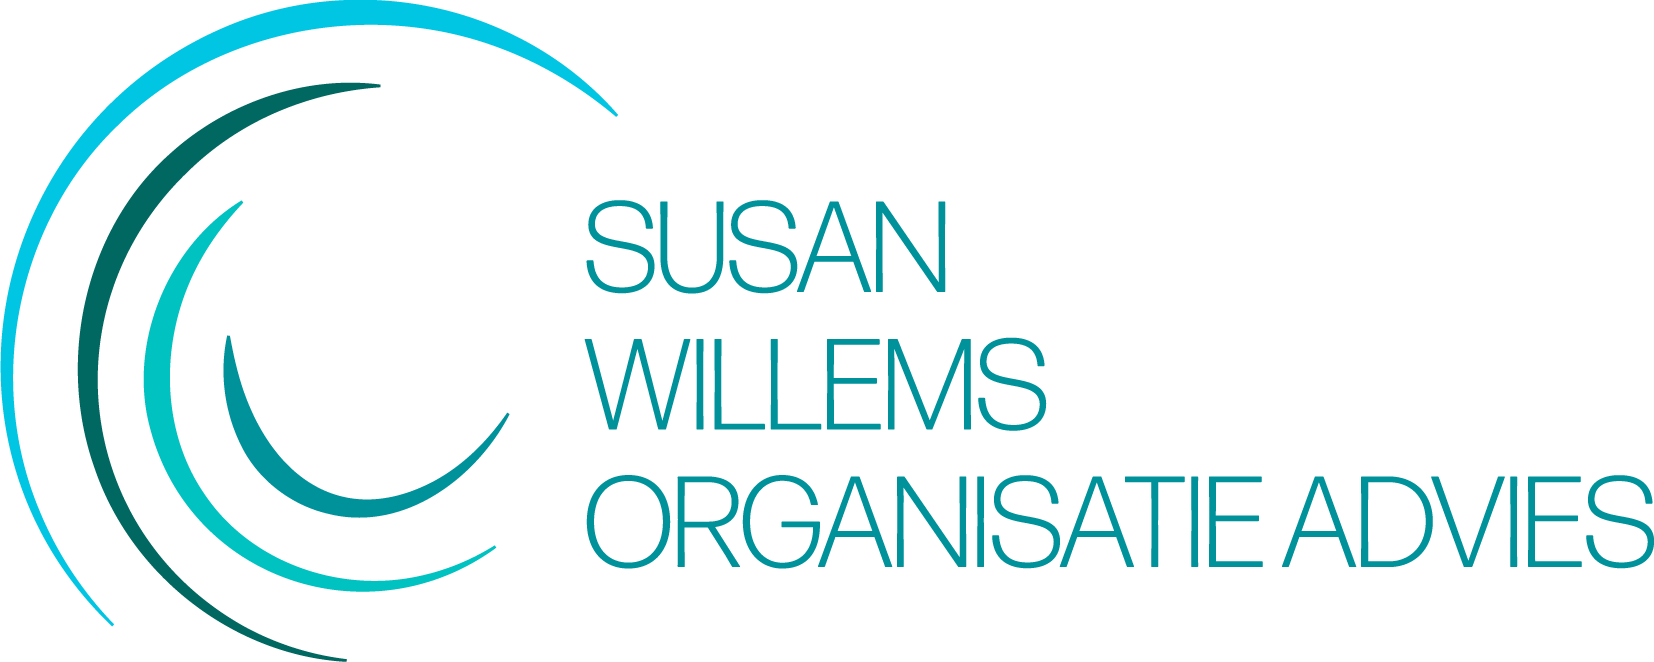 Susan Willems Organisatieadvies